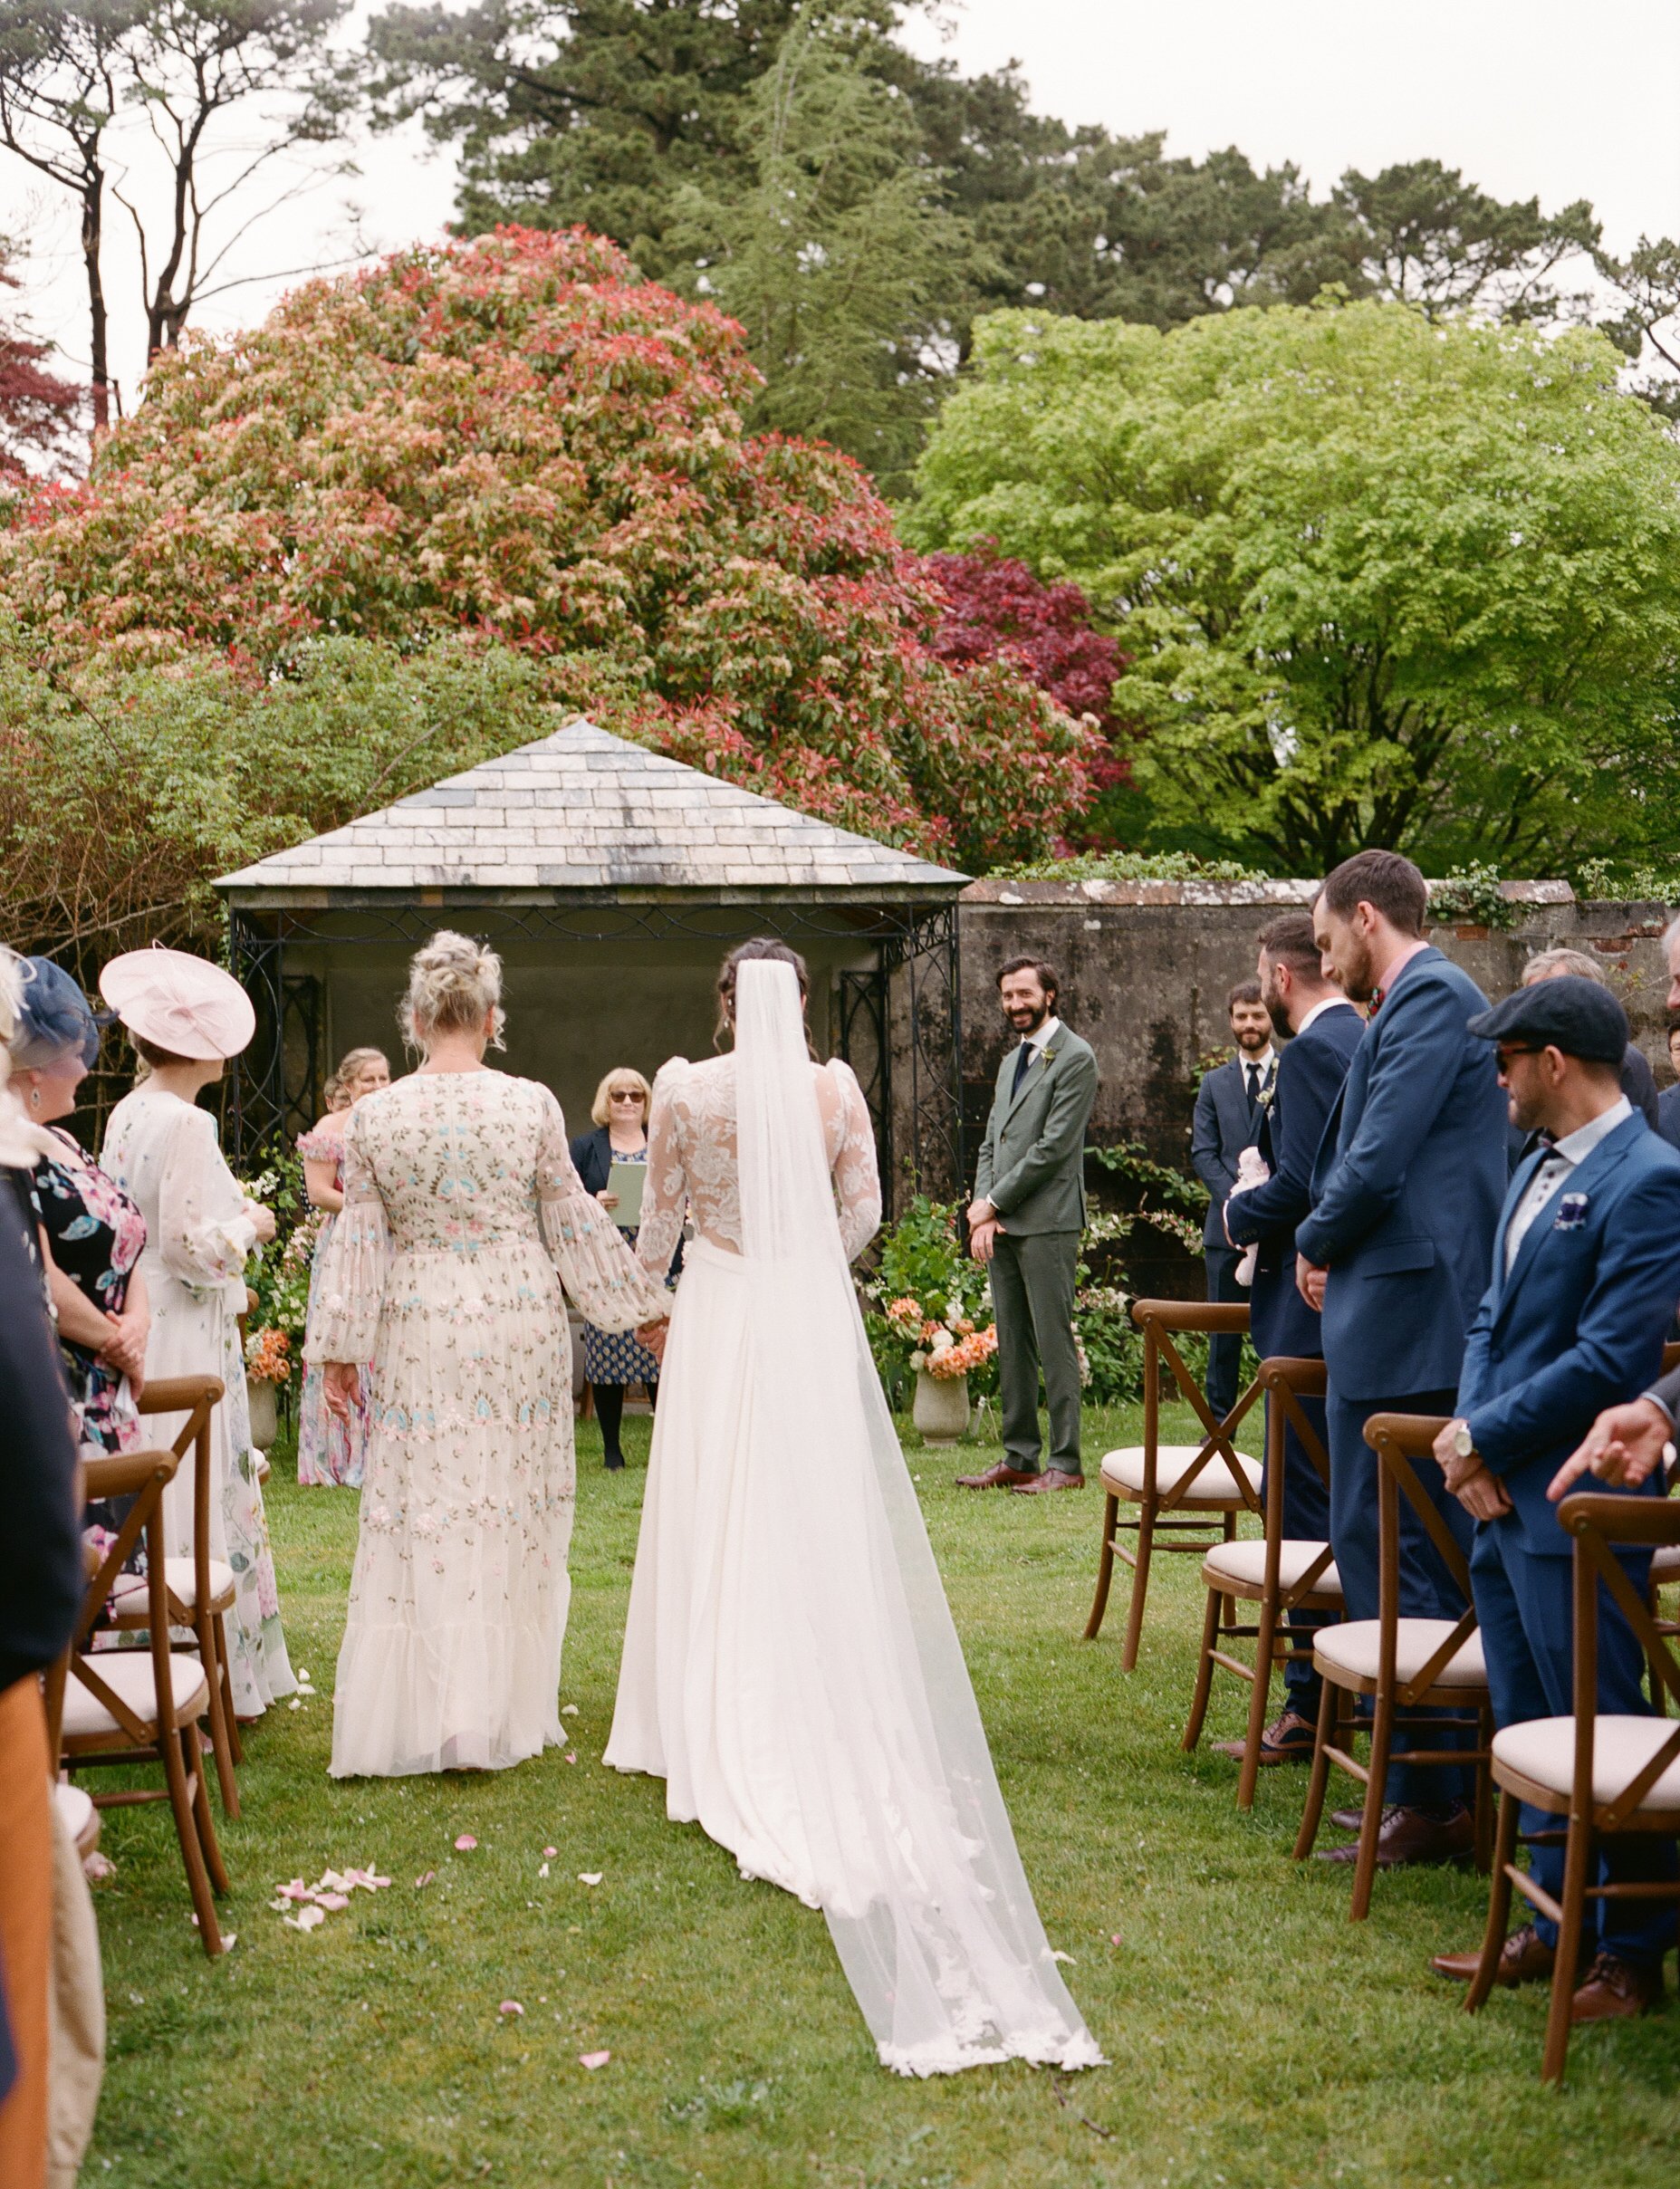 Weddings in the Dorothy Gardens